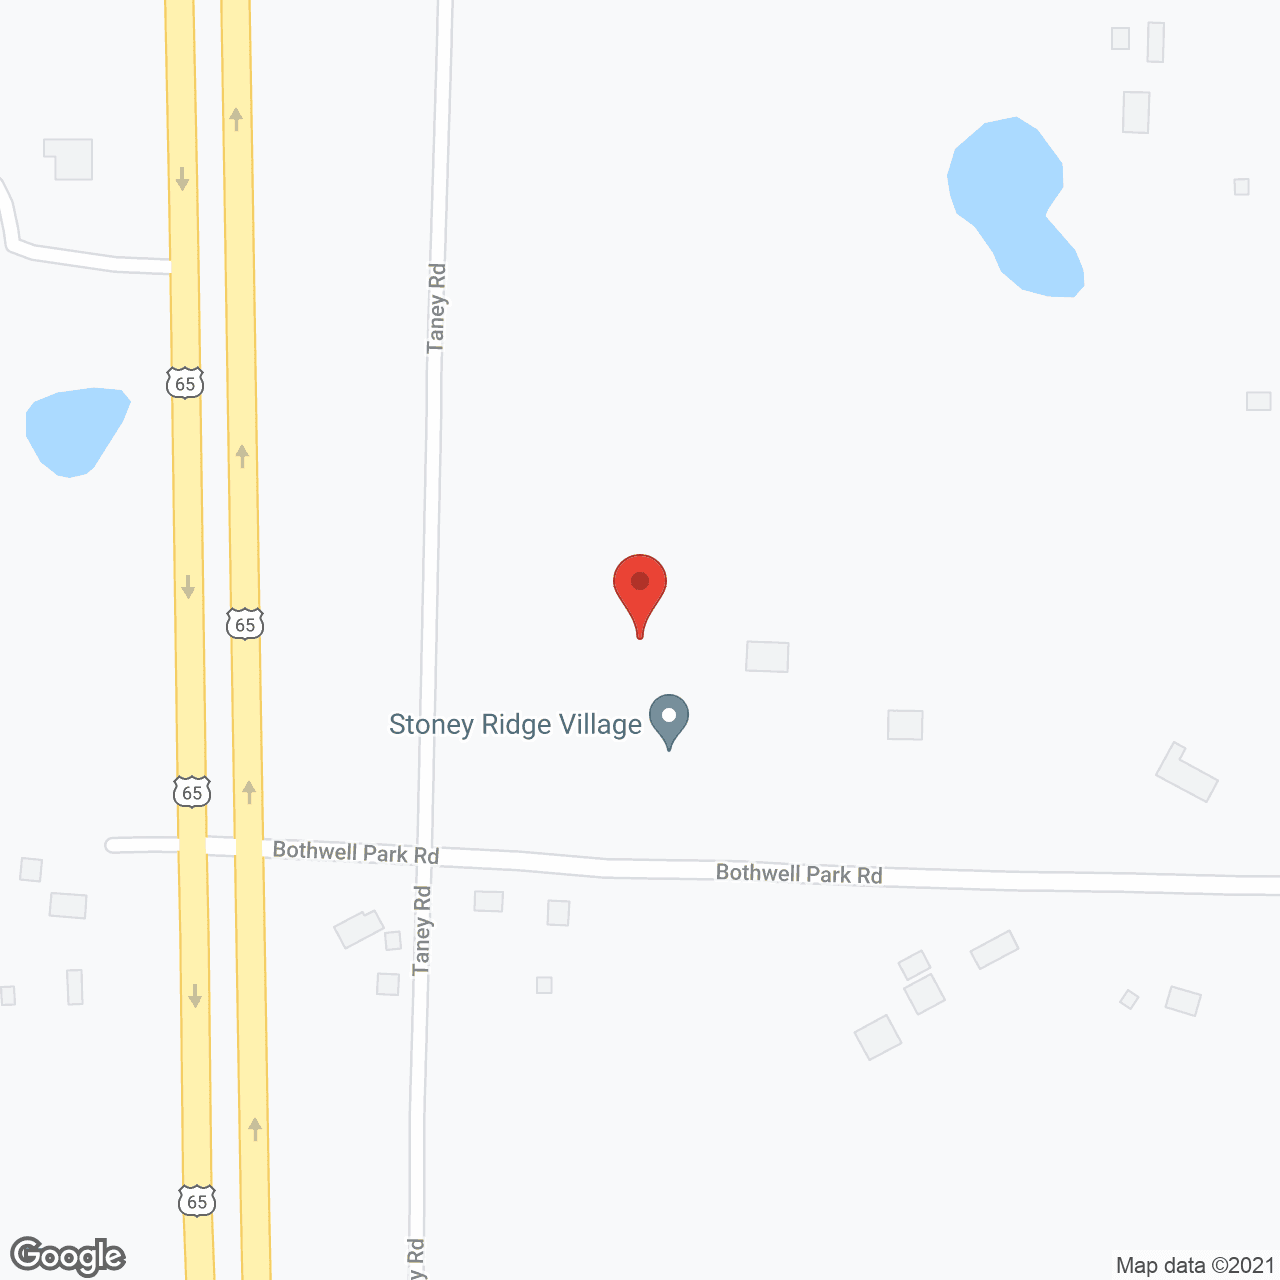 Stoney Ridge Village in google map